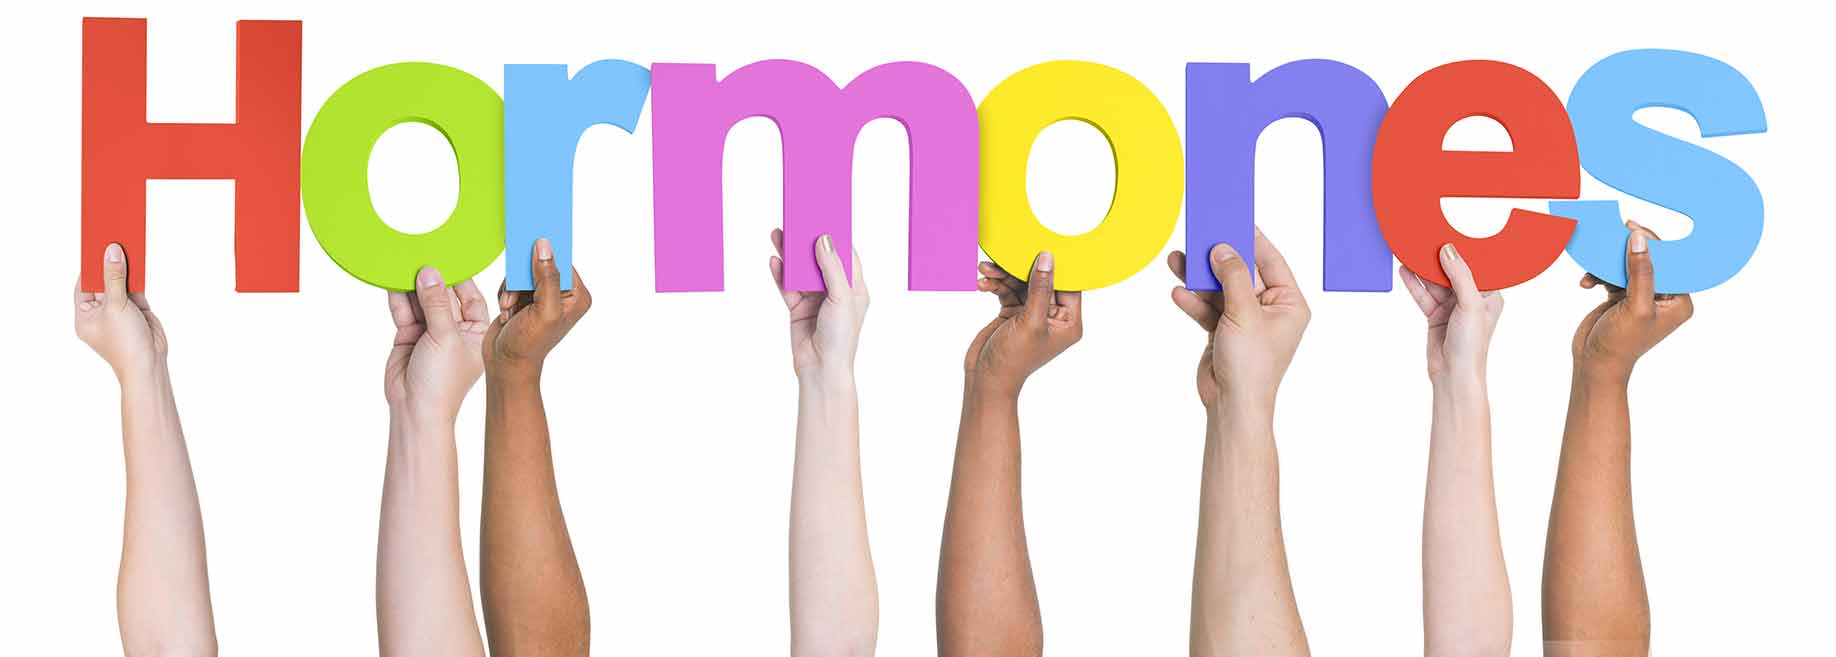 hormones imbalance menopause menses periods pms natural remedies balance